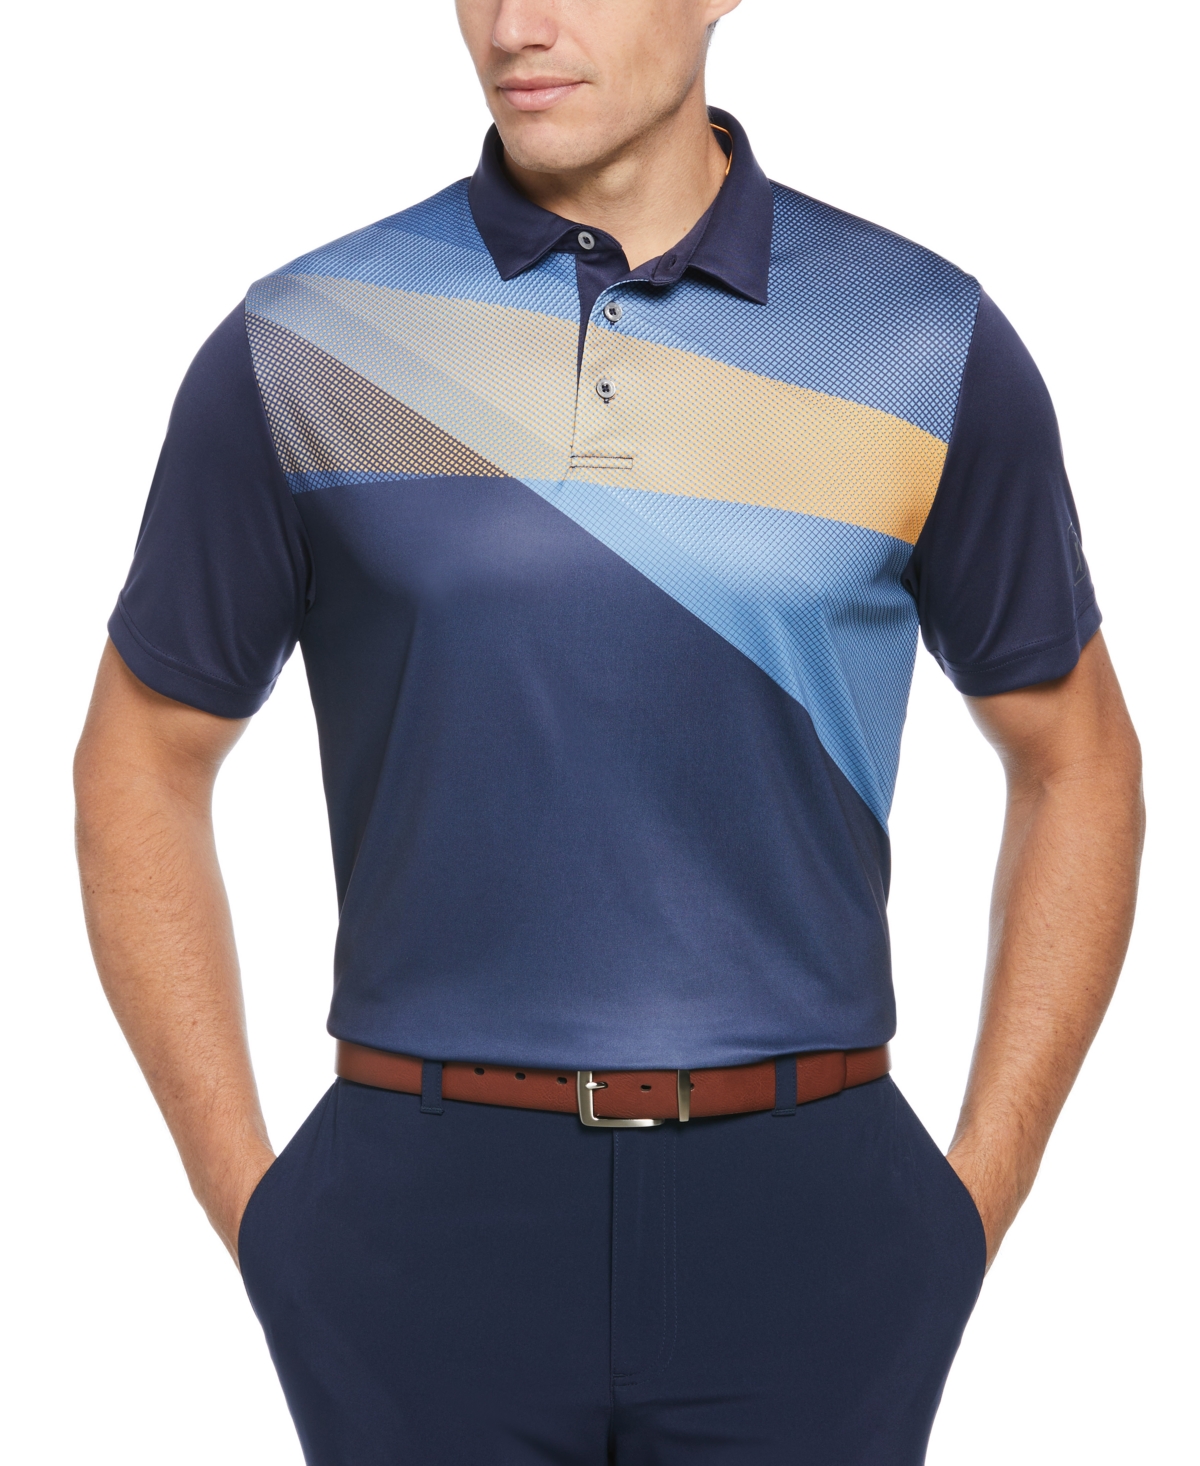 Men's Athletic Fit Shadow Asymmetric Print Short Sleeve Golf Polo Shirt - Peacoat